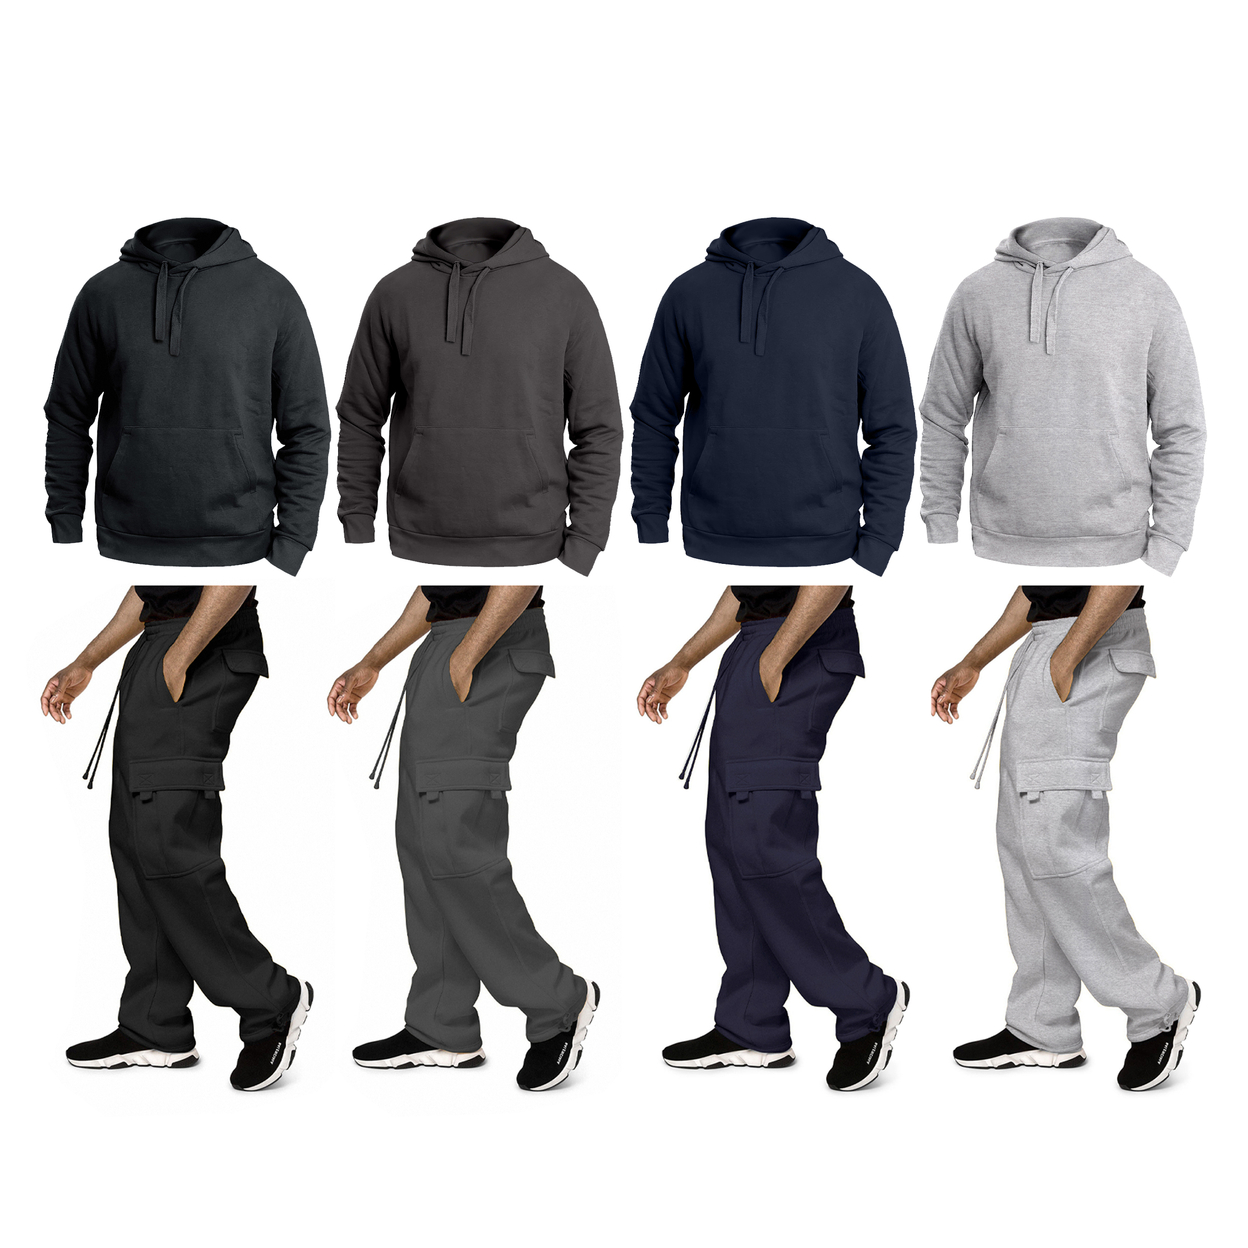 Multi-Pack: Big & Tall Men's Winter Warm Cozy Athletic Fleece Lined Multi-Pocket Cargo Sweatsuit - Navy, 2-pack, Medium